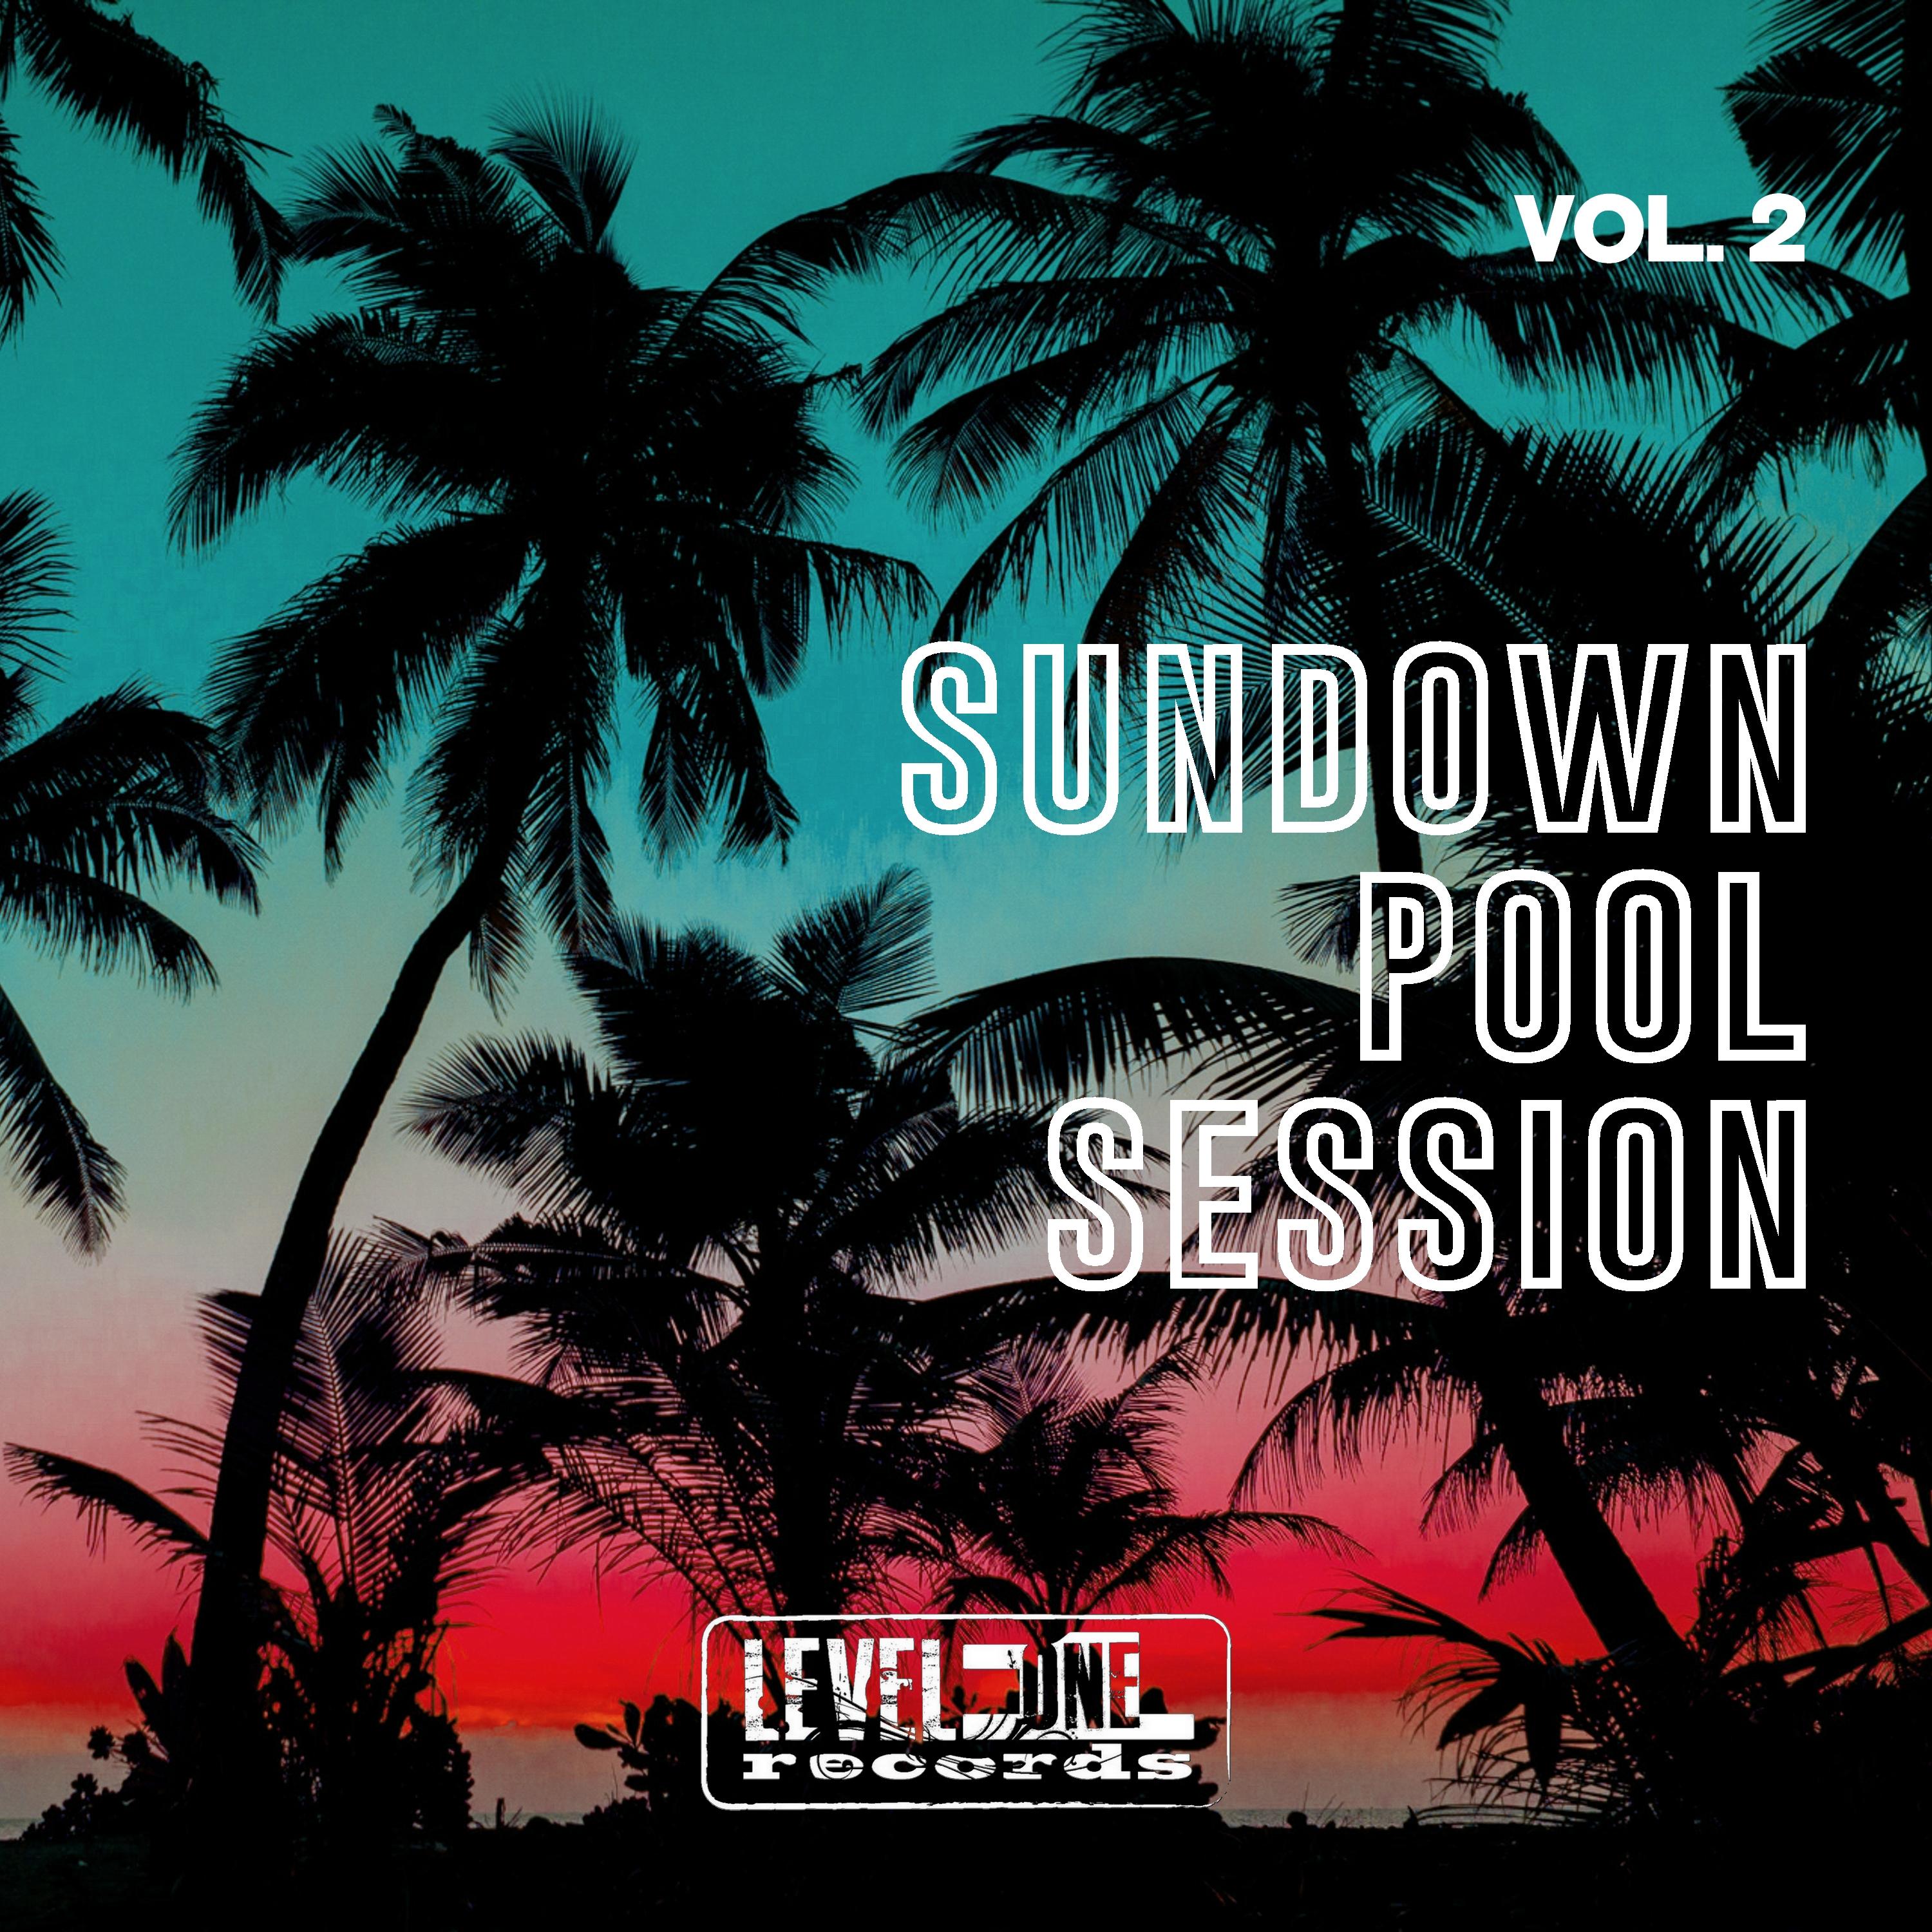 Sundown Pool Session, Vol. 2